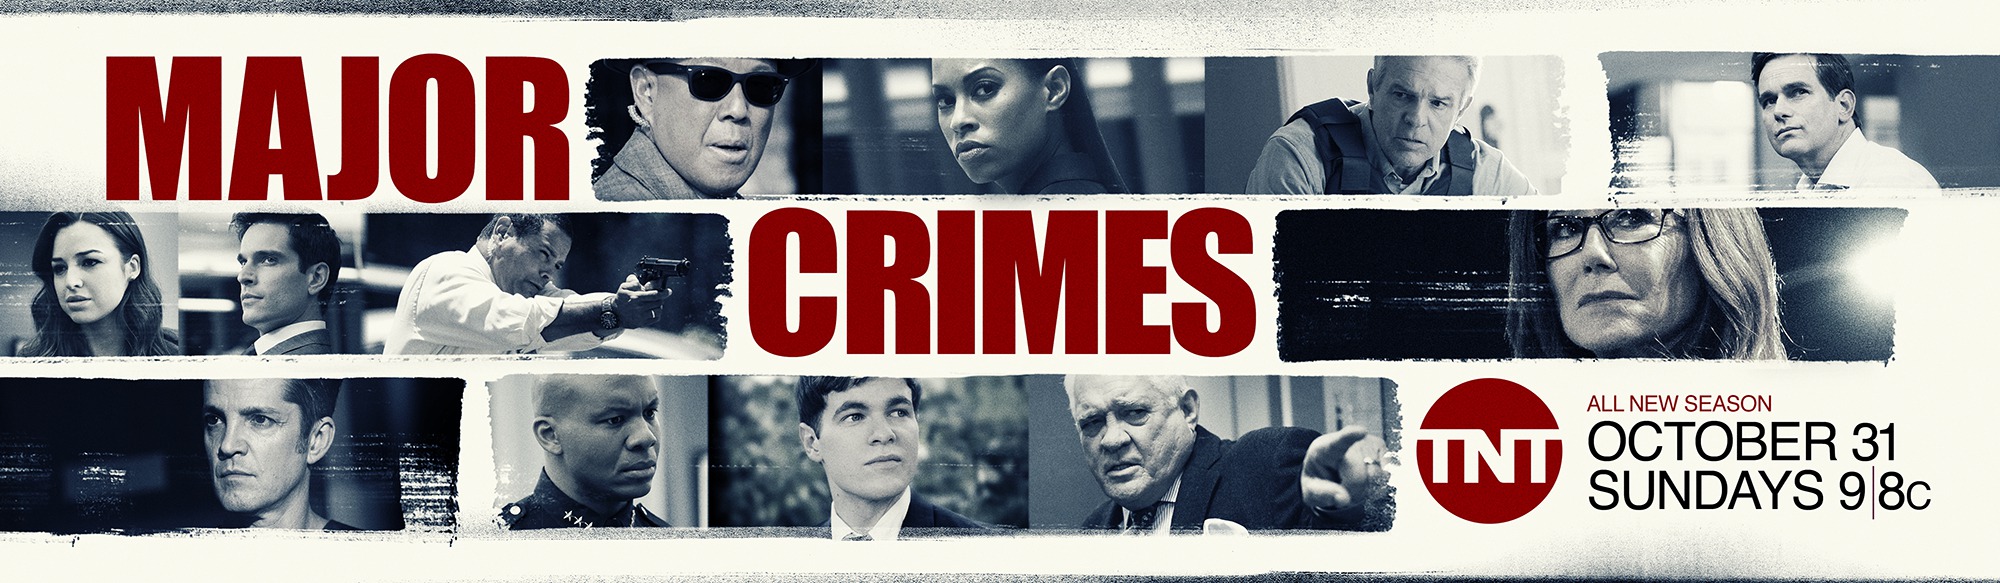 Mega Sized TV Poster Image for Major Crimes (#8 of 8)